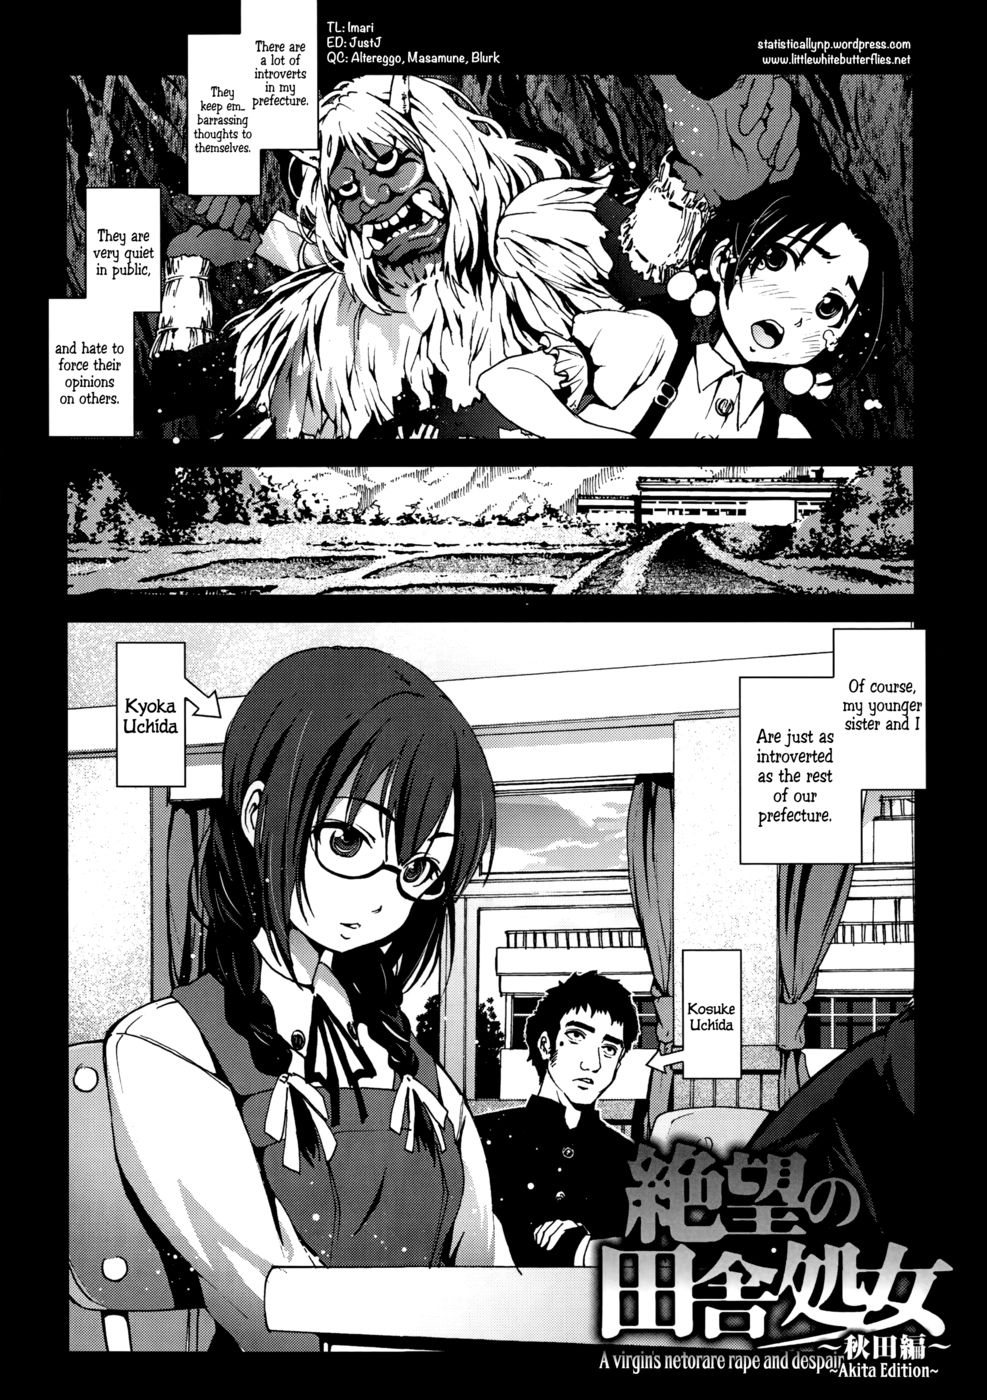 Hentai Manga Comic-A Virgin's Netorare Rape and Despair-Chapter 3 - Akita Edition extended-1